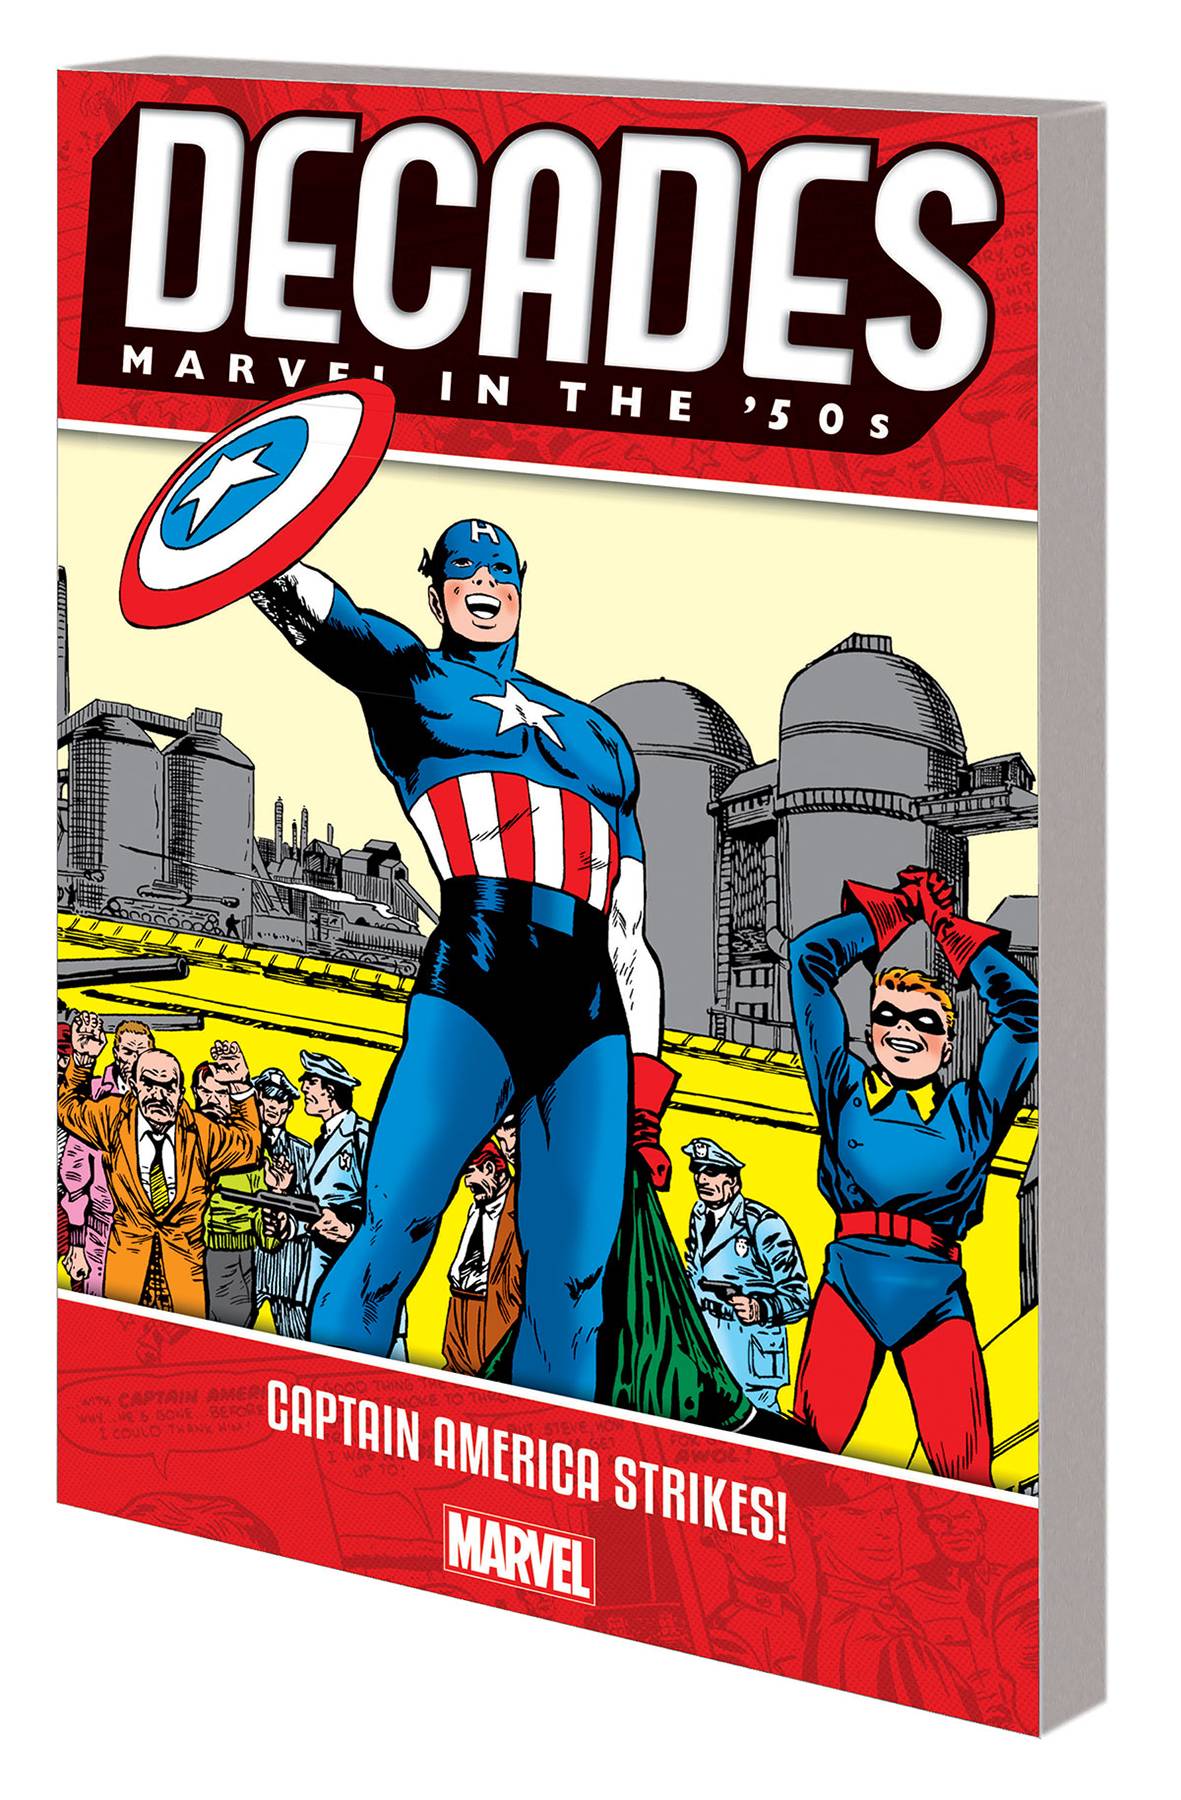 Decades Marvel 50's Graphic Novel Captain America Strikes